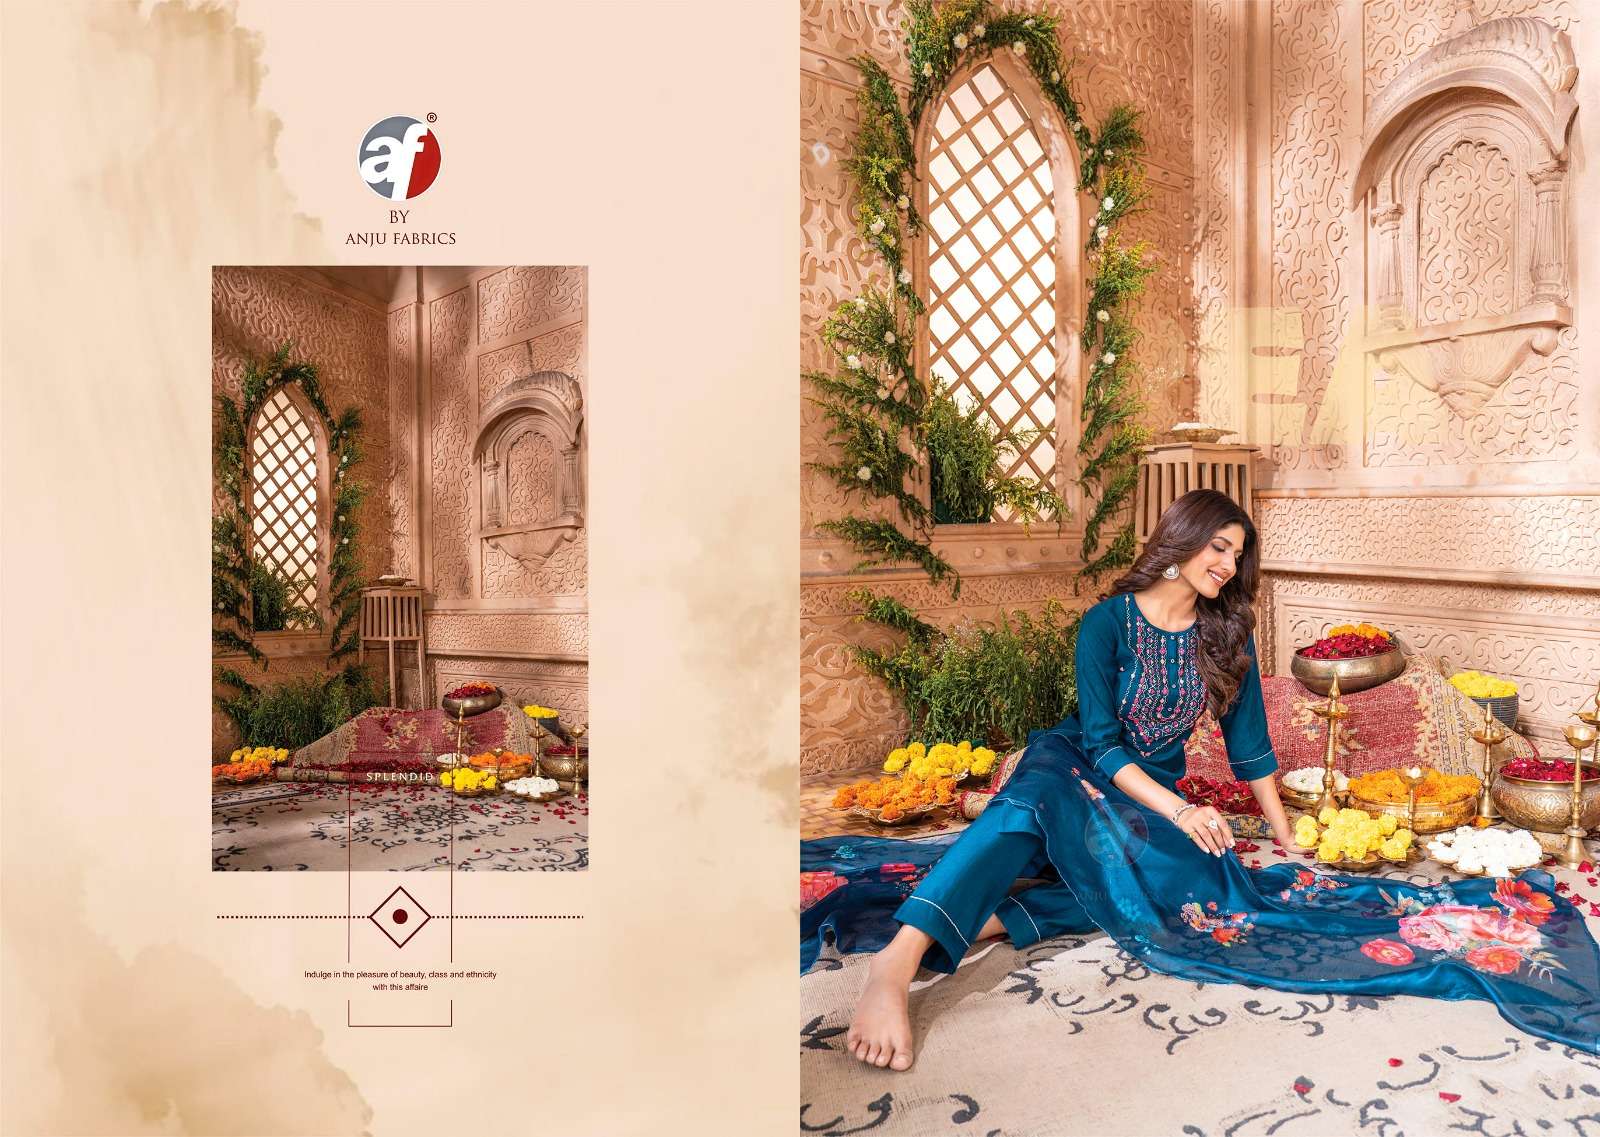 Anju Fabrics Real Touch vol -3 Kurti Wholesale catalog